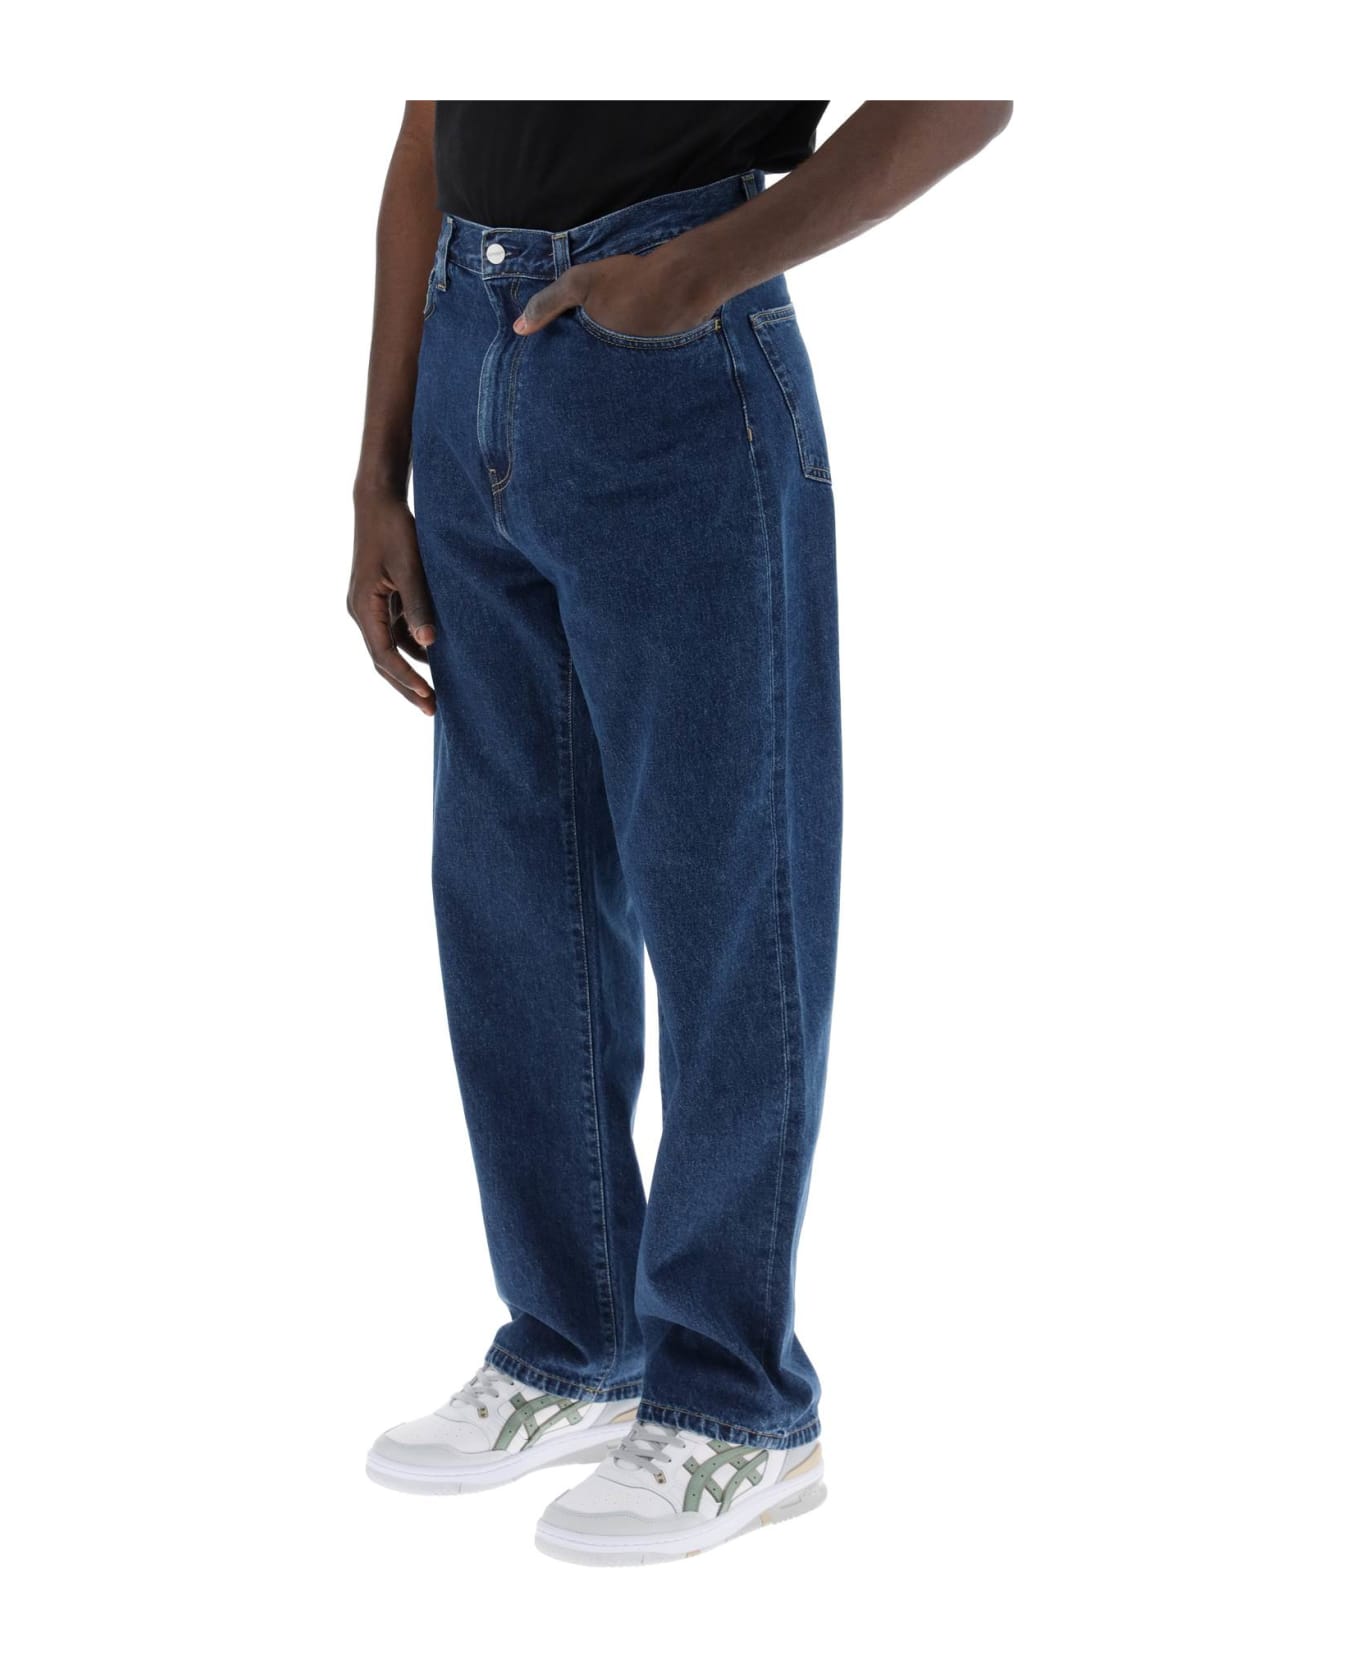 Carhartt Landon Denim Jeans - BLUE HEAVY STONE WASH